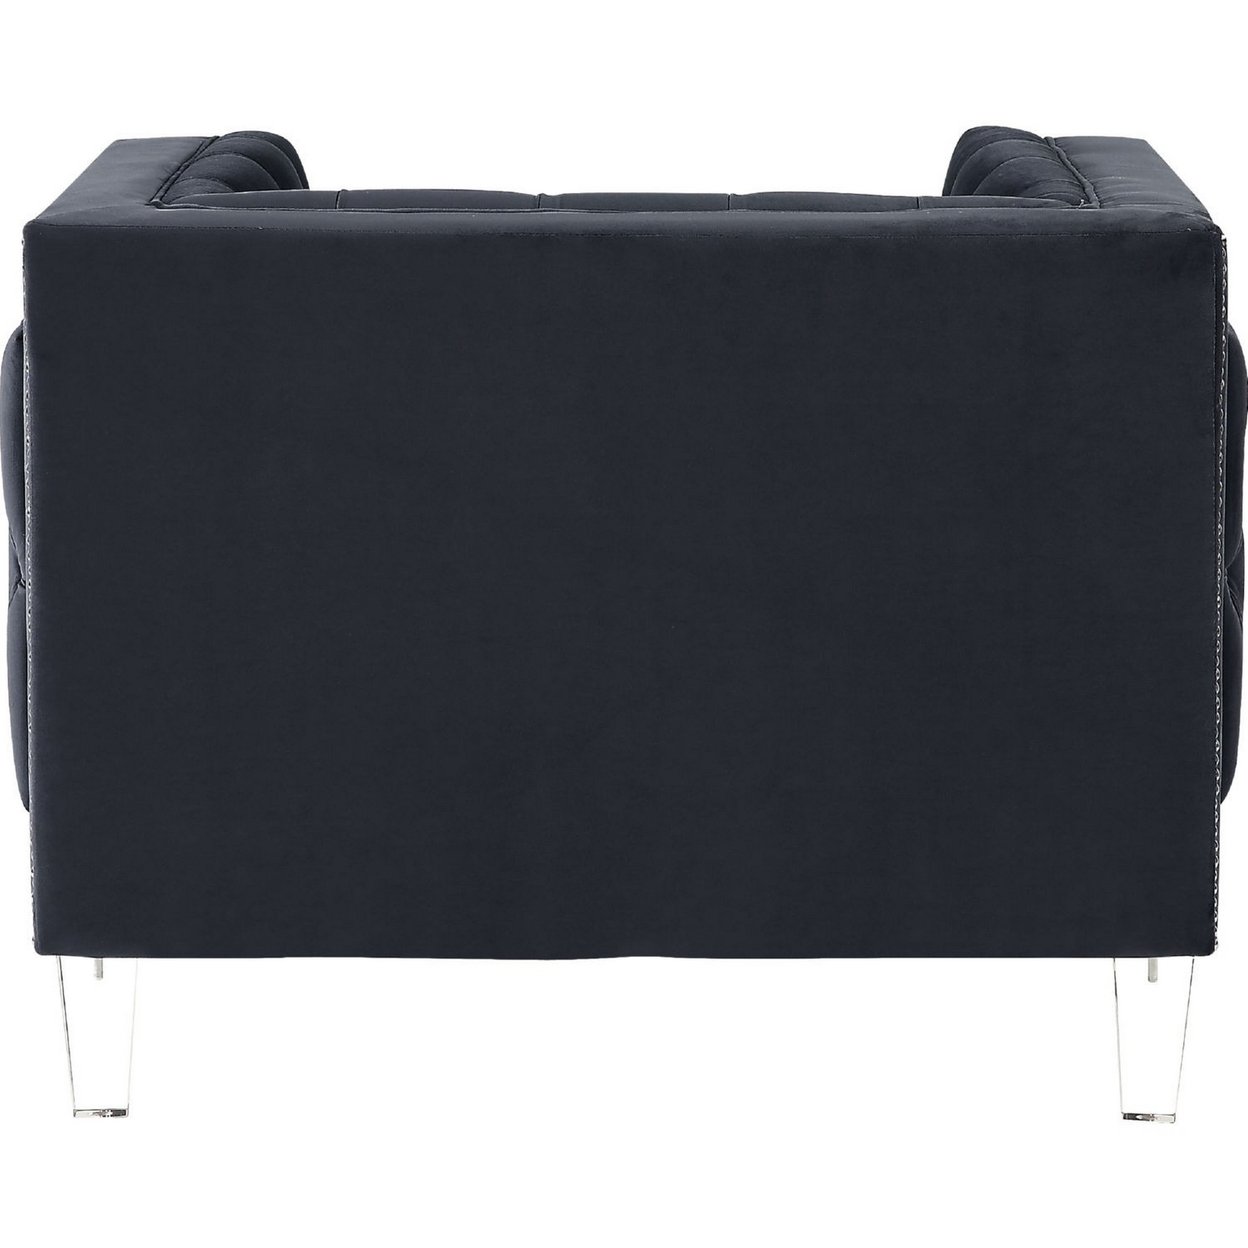 Velvet Upholstered Chair, With Tufted Details And Acrylic Legs, Black- Saltoro Sherpi